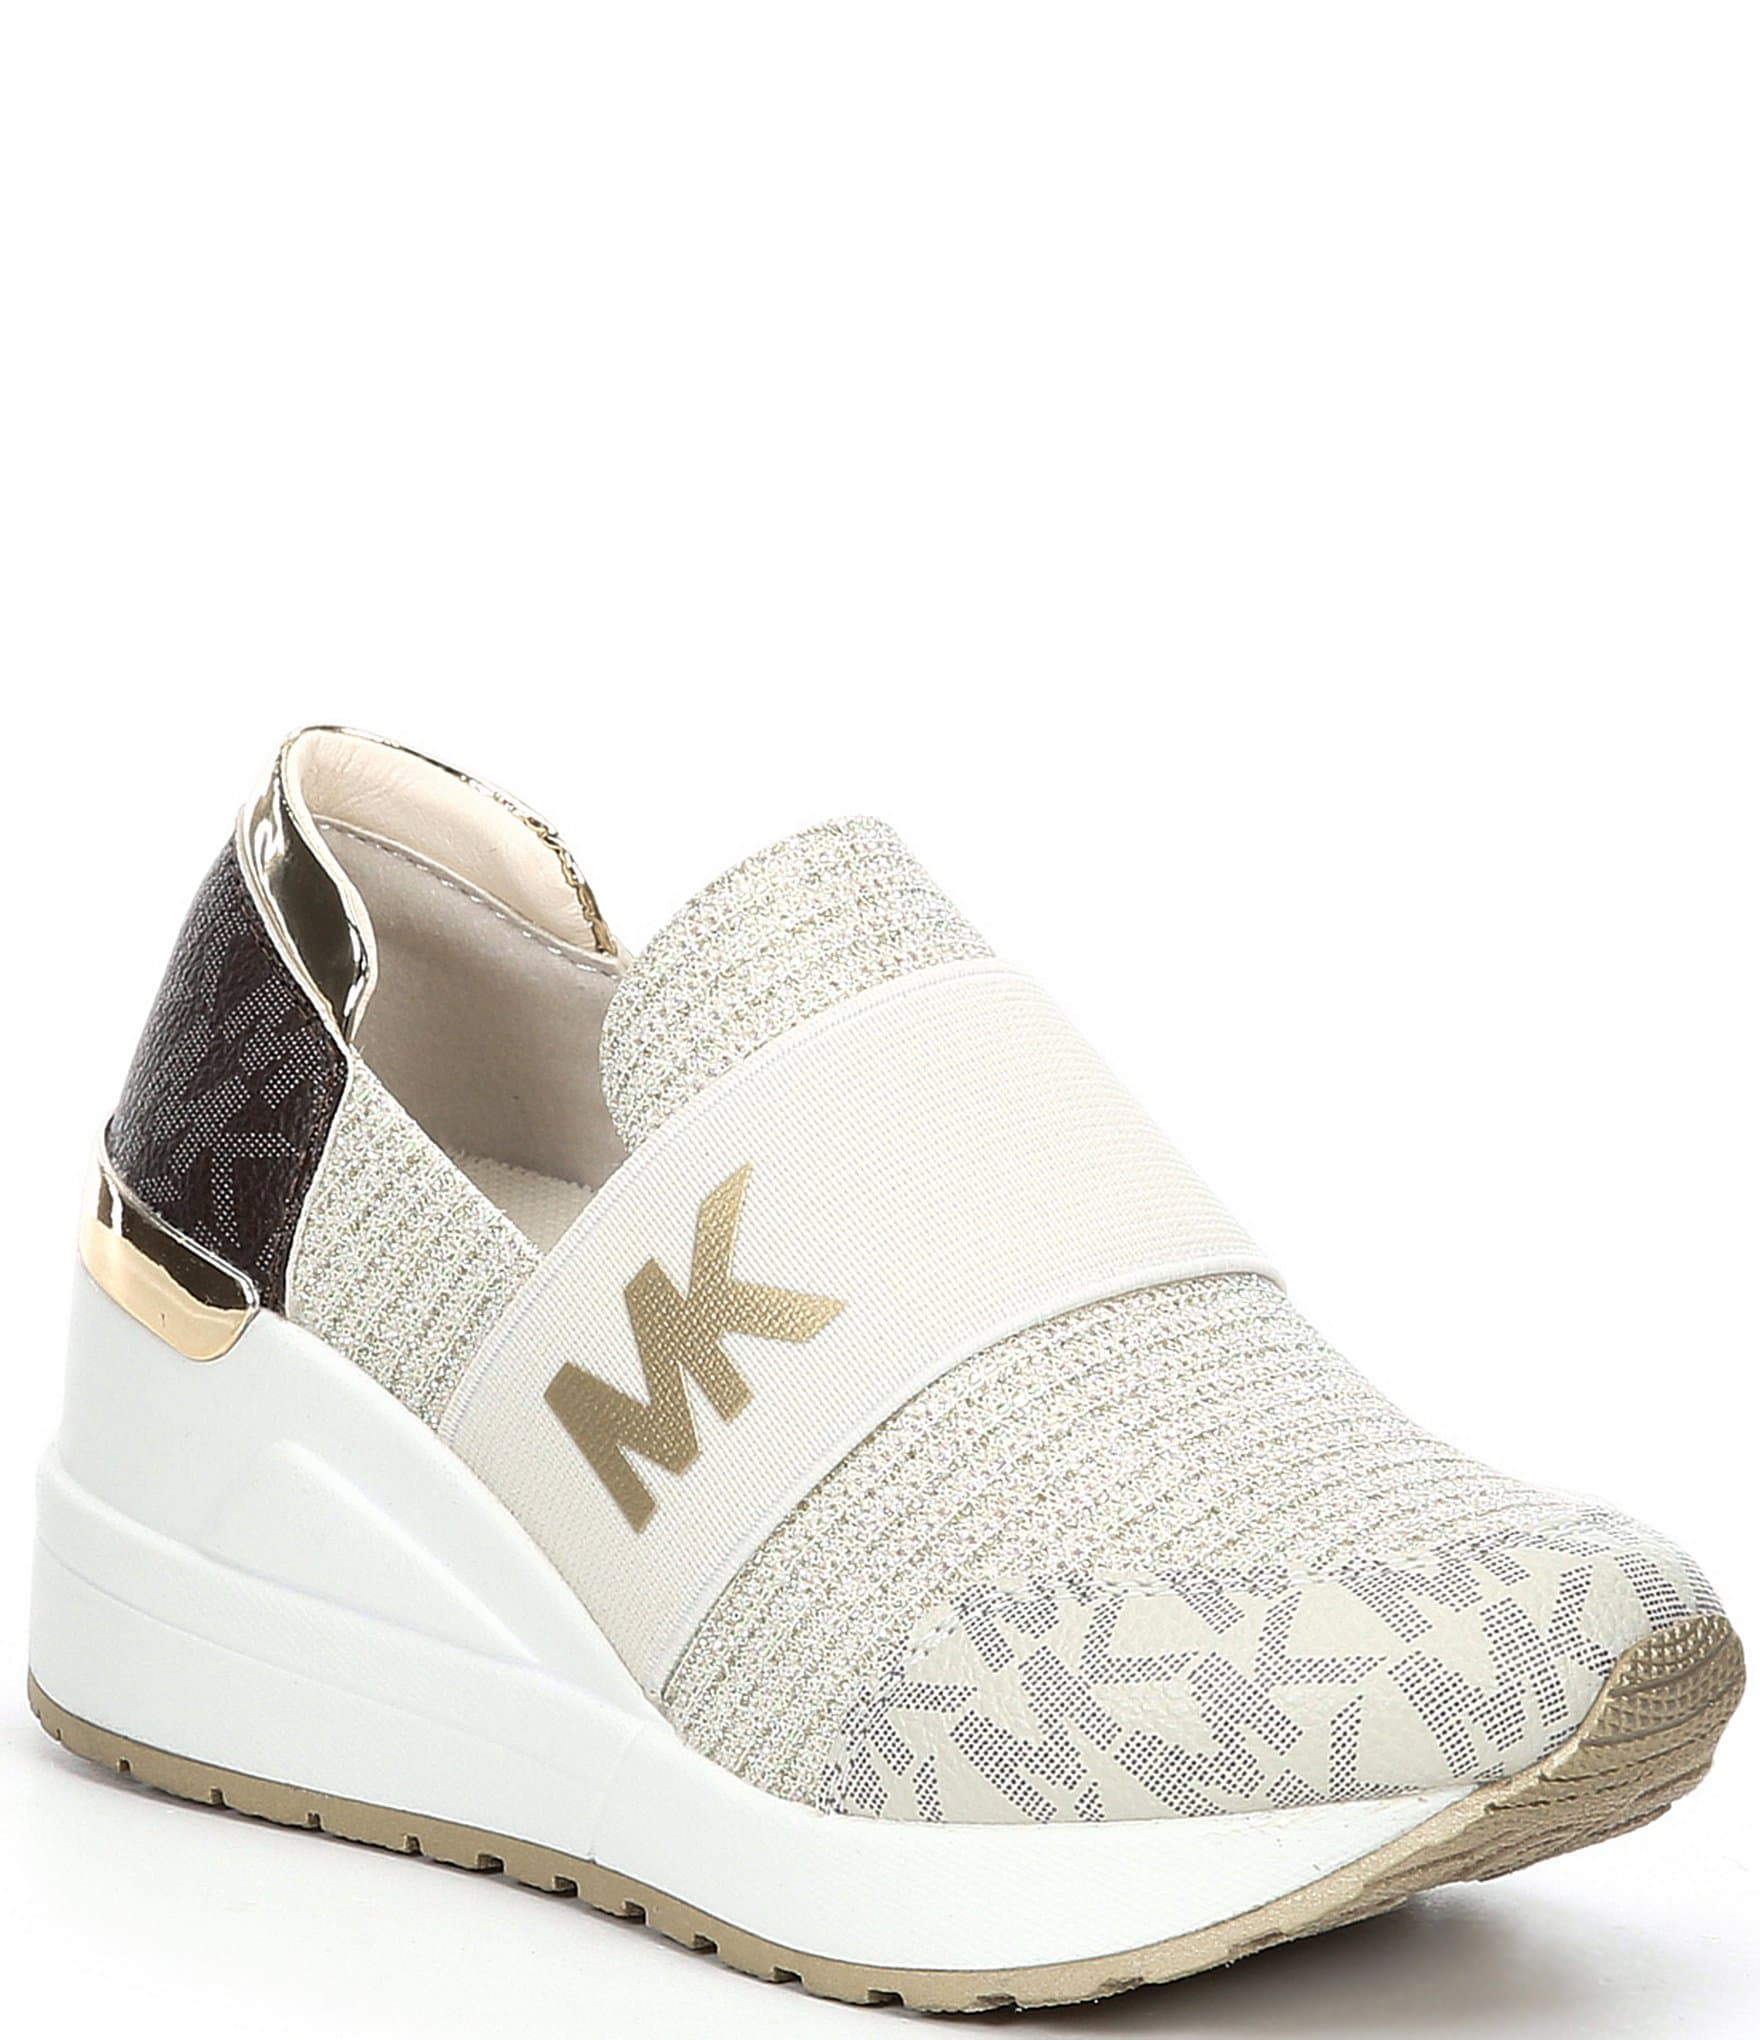 Michael Kors Shoes Trainers Muse Trainer Mk Jacquard Light Cream Multi  Gr39 New  eBay